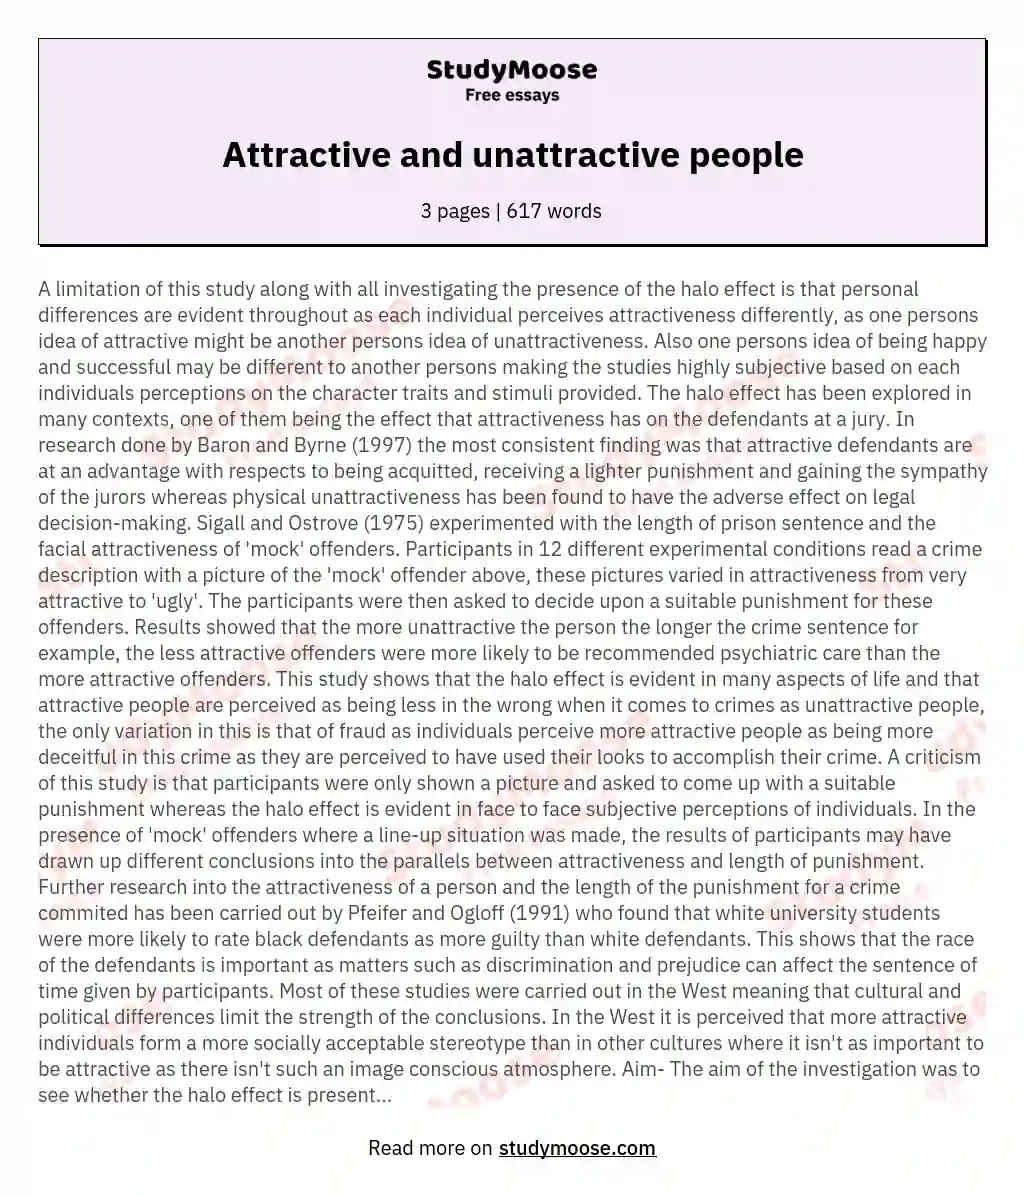 Attractive and unattractive people essay